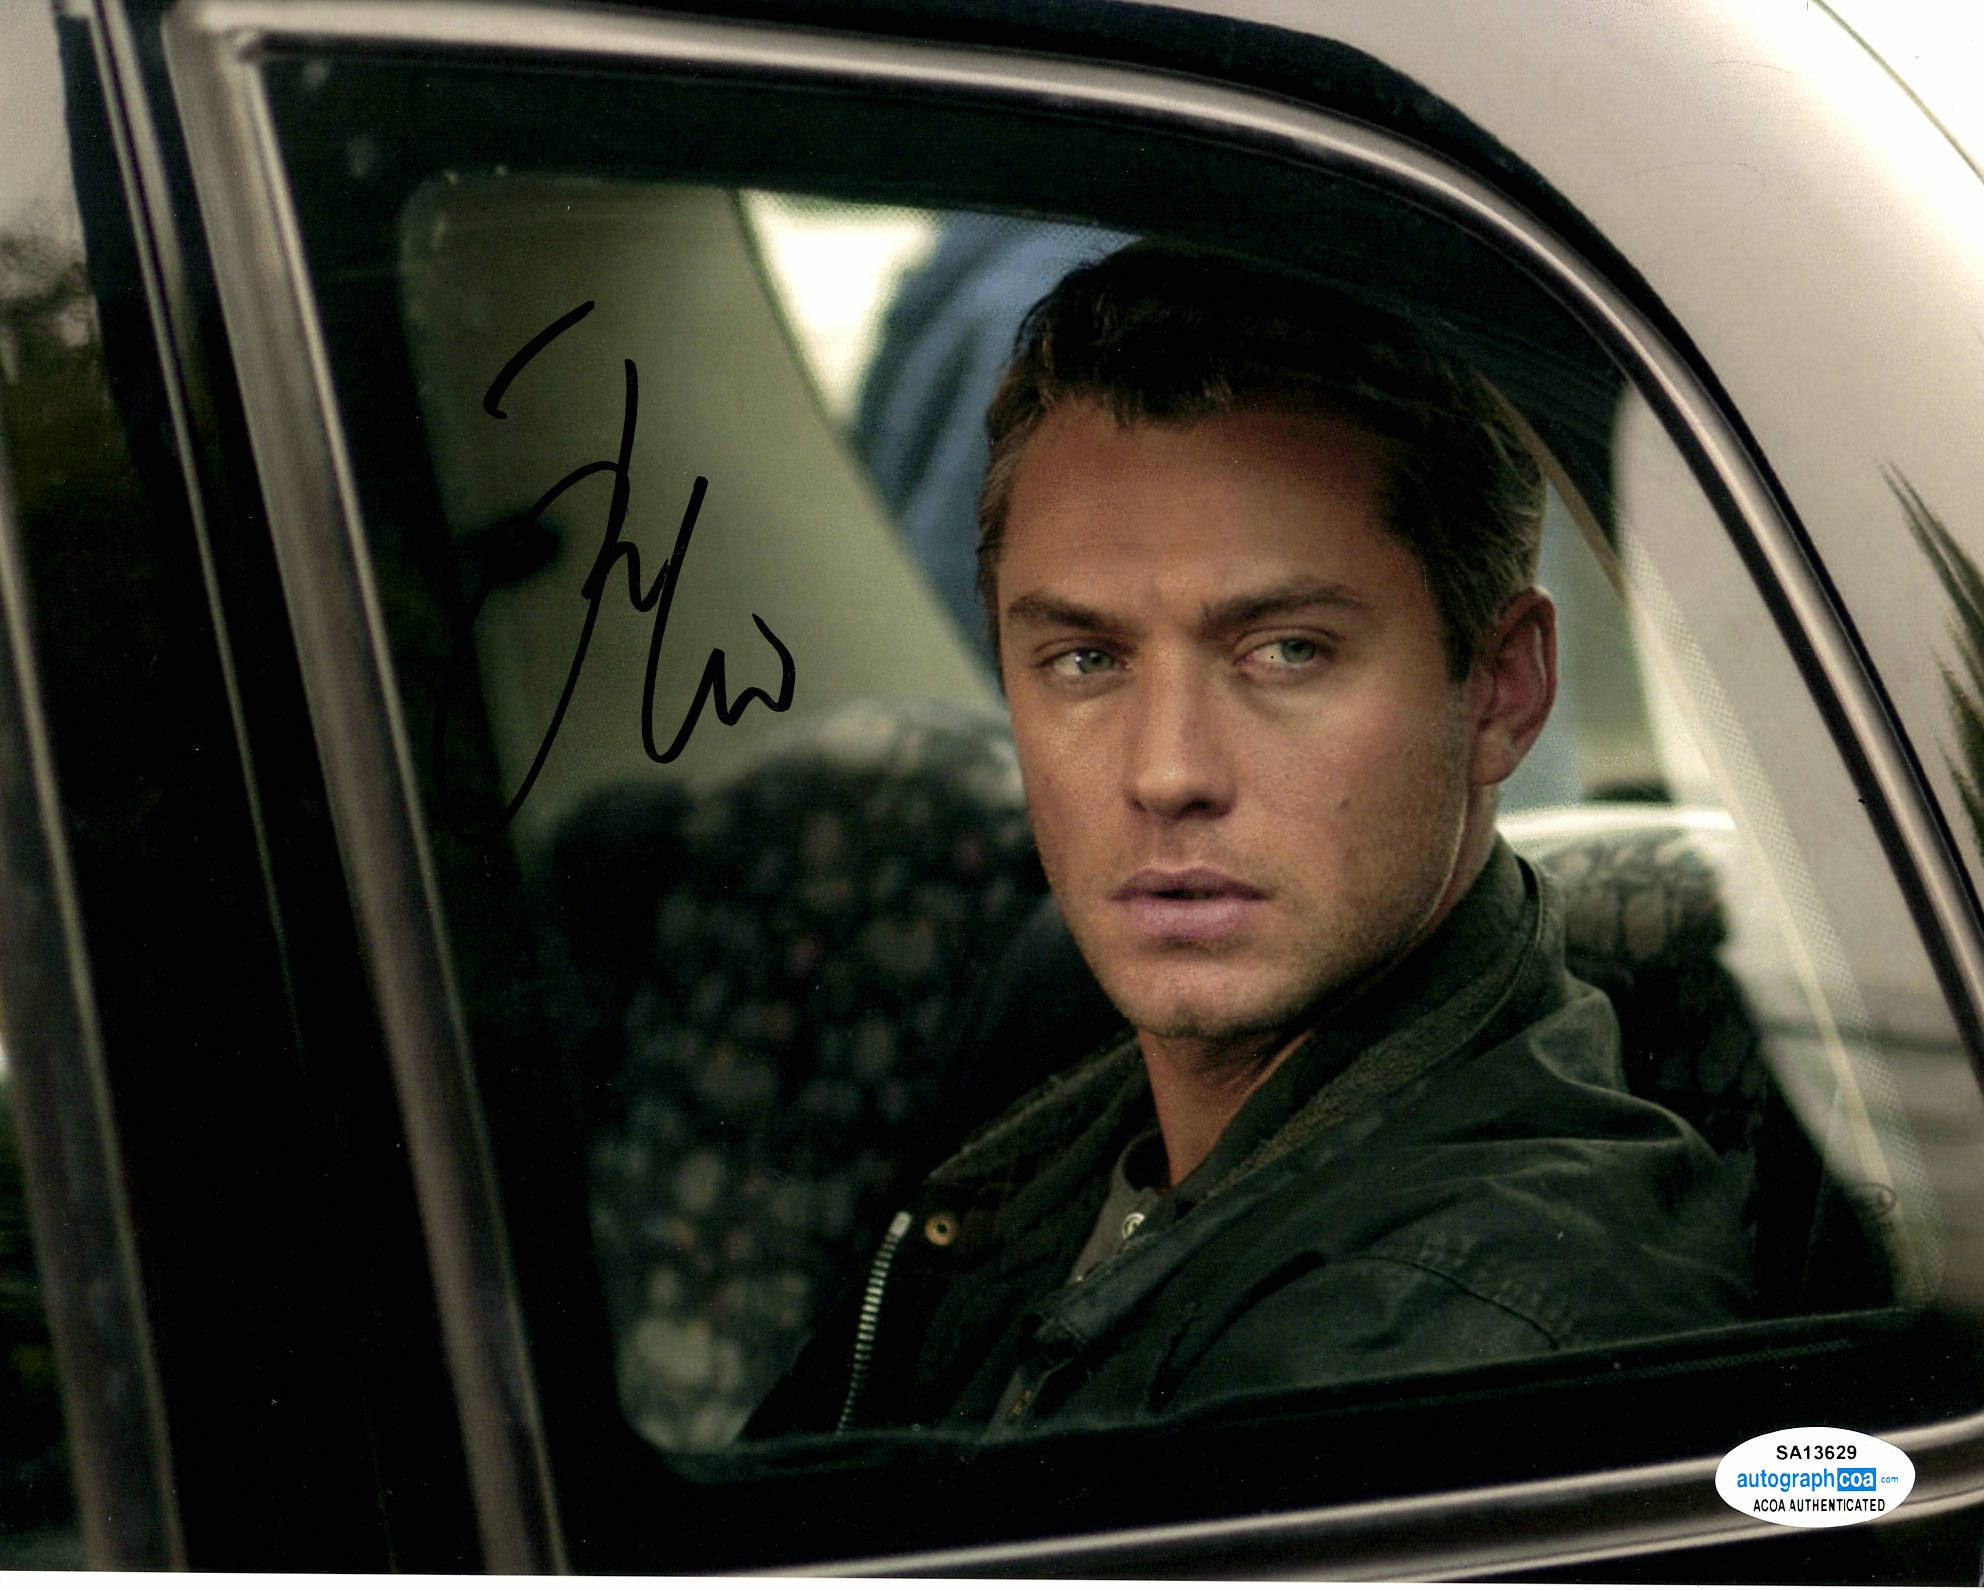 Jude Law Sherlock Signed Autograph 8x10 Photo #2 - Outlaw Hobbies Authentic Autographs